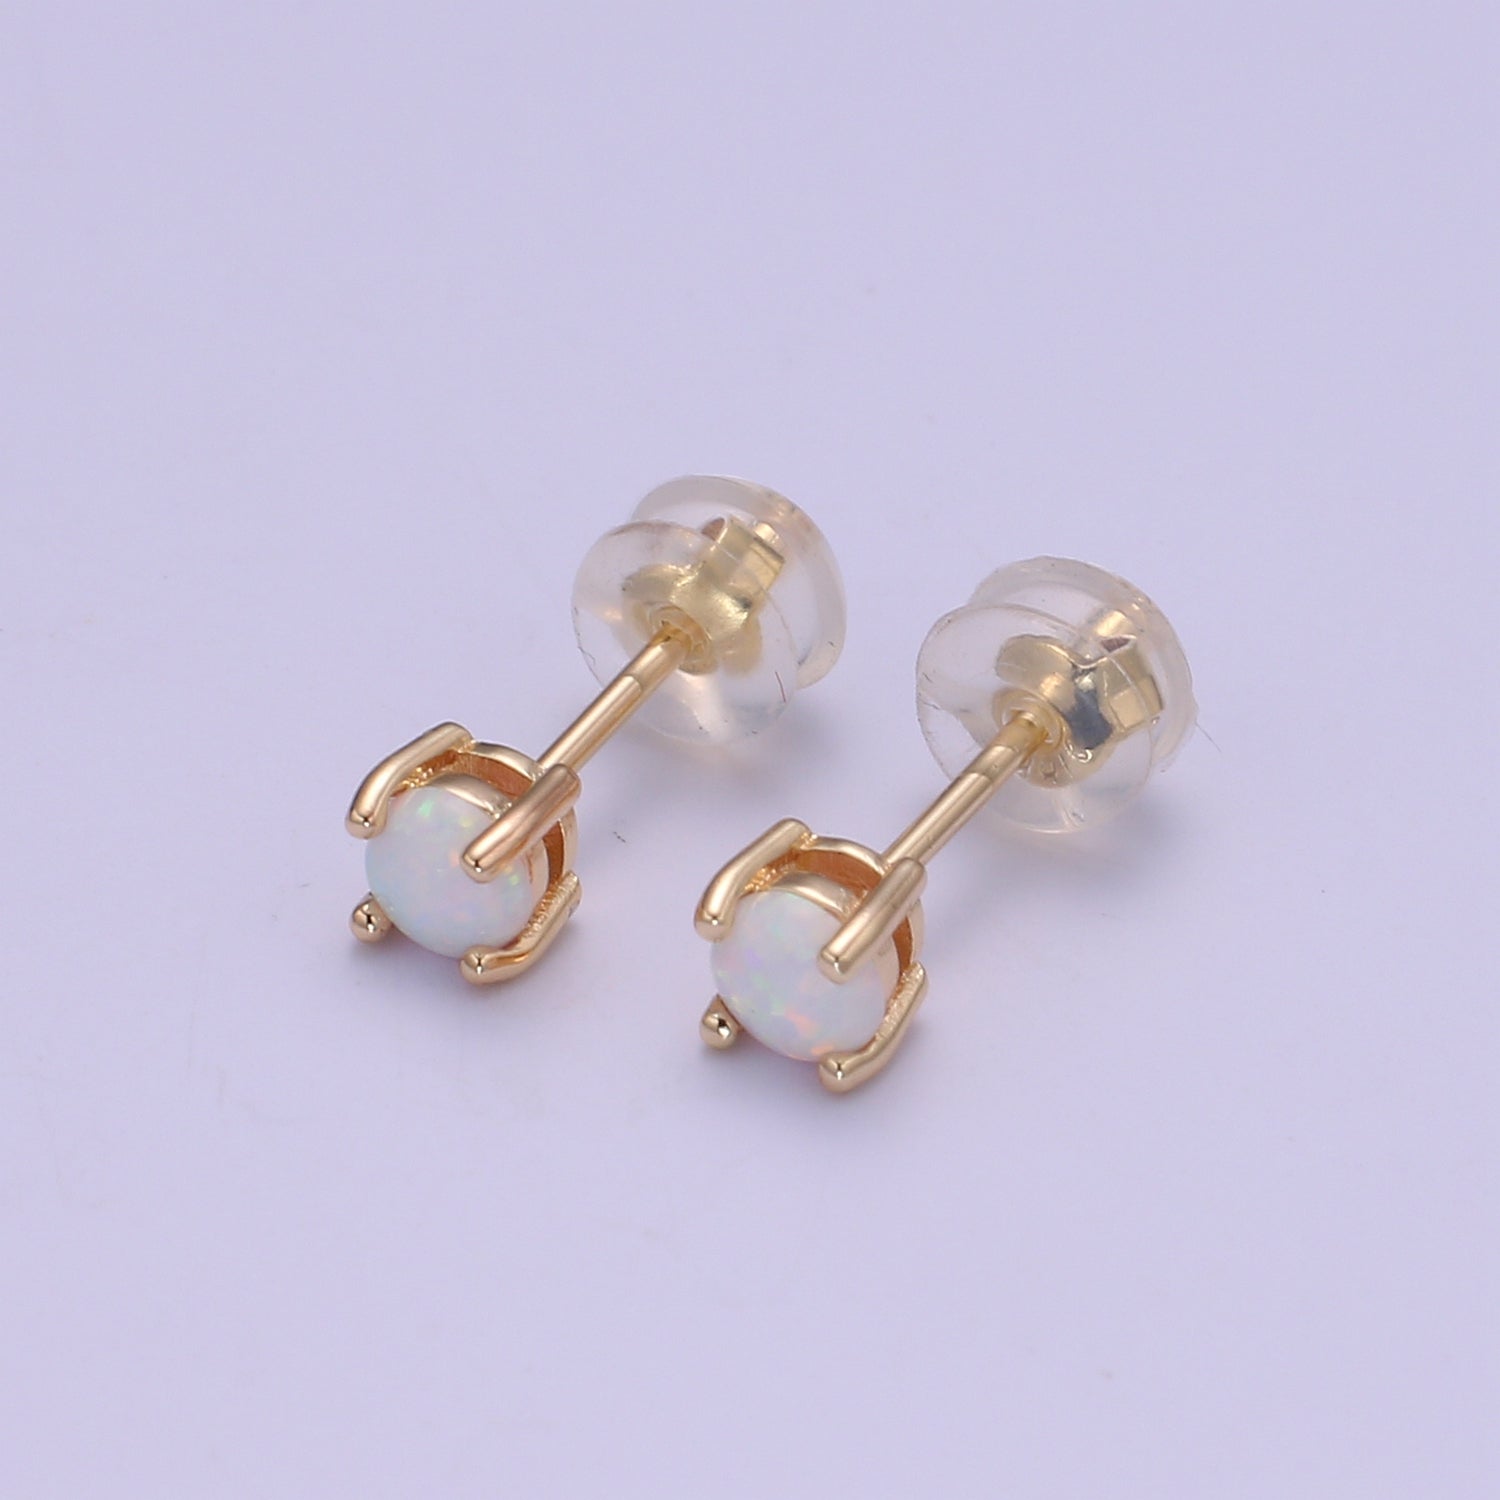 Minimalist Opal Stud Earrings in 18k Gold Filled Earring Pink Blue White Opal, Tiny Circle Dot Jewellery Dainty Stud Earring for gift - DLUXCA